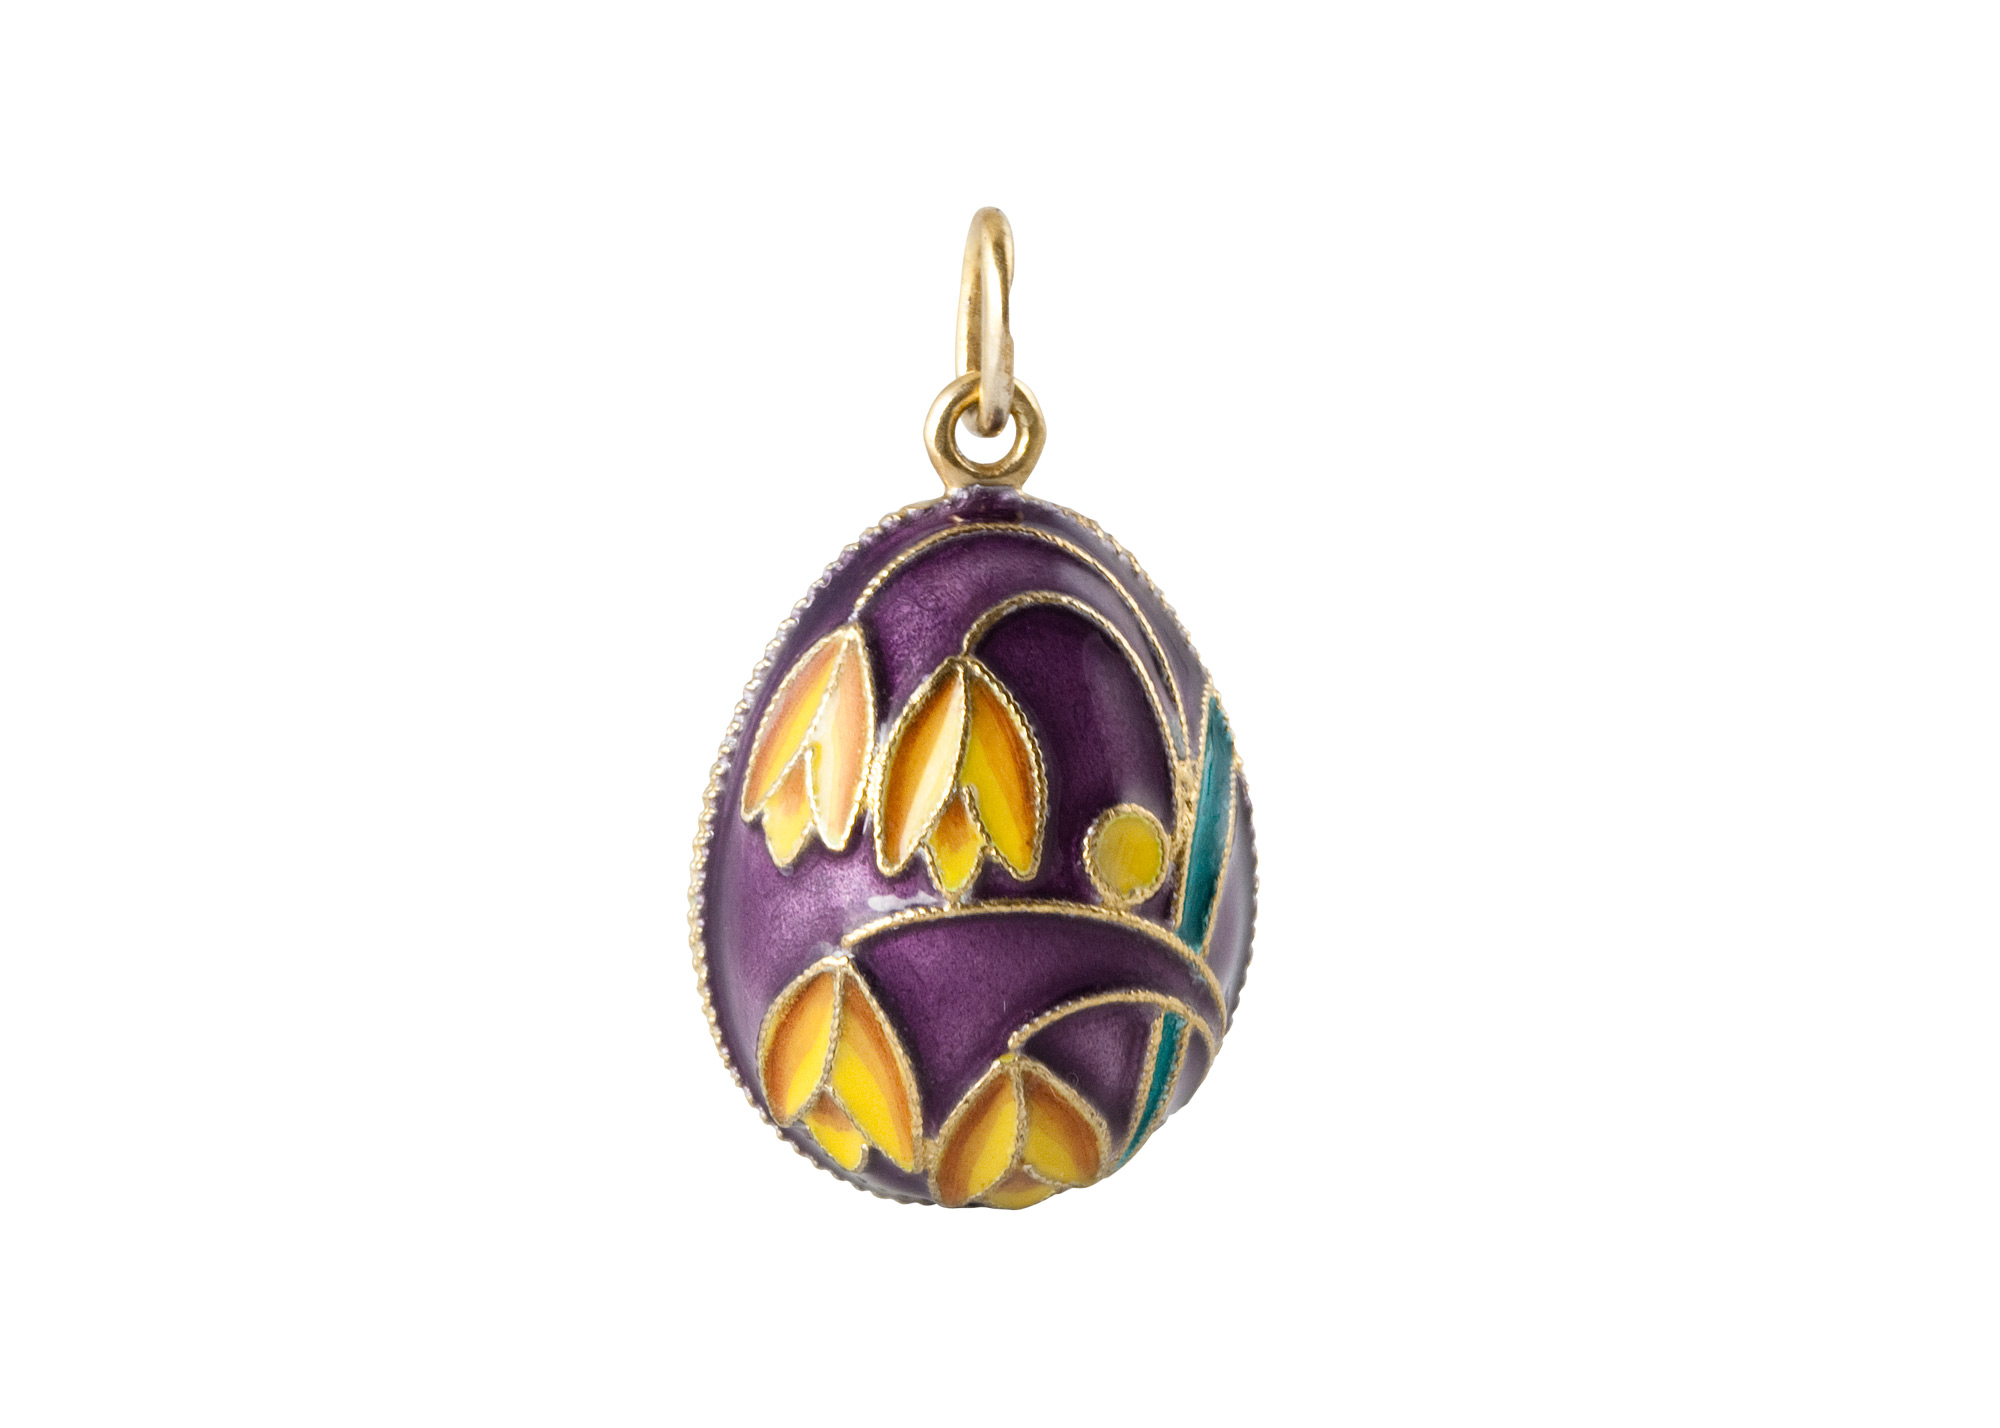 Buy Faberge Pendant Purple w/ Yellow Flowers at GoldenCockerel.com